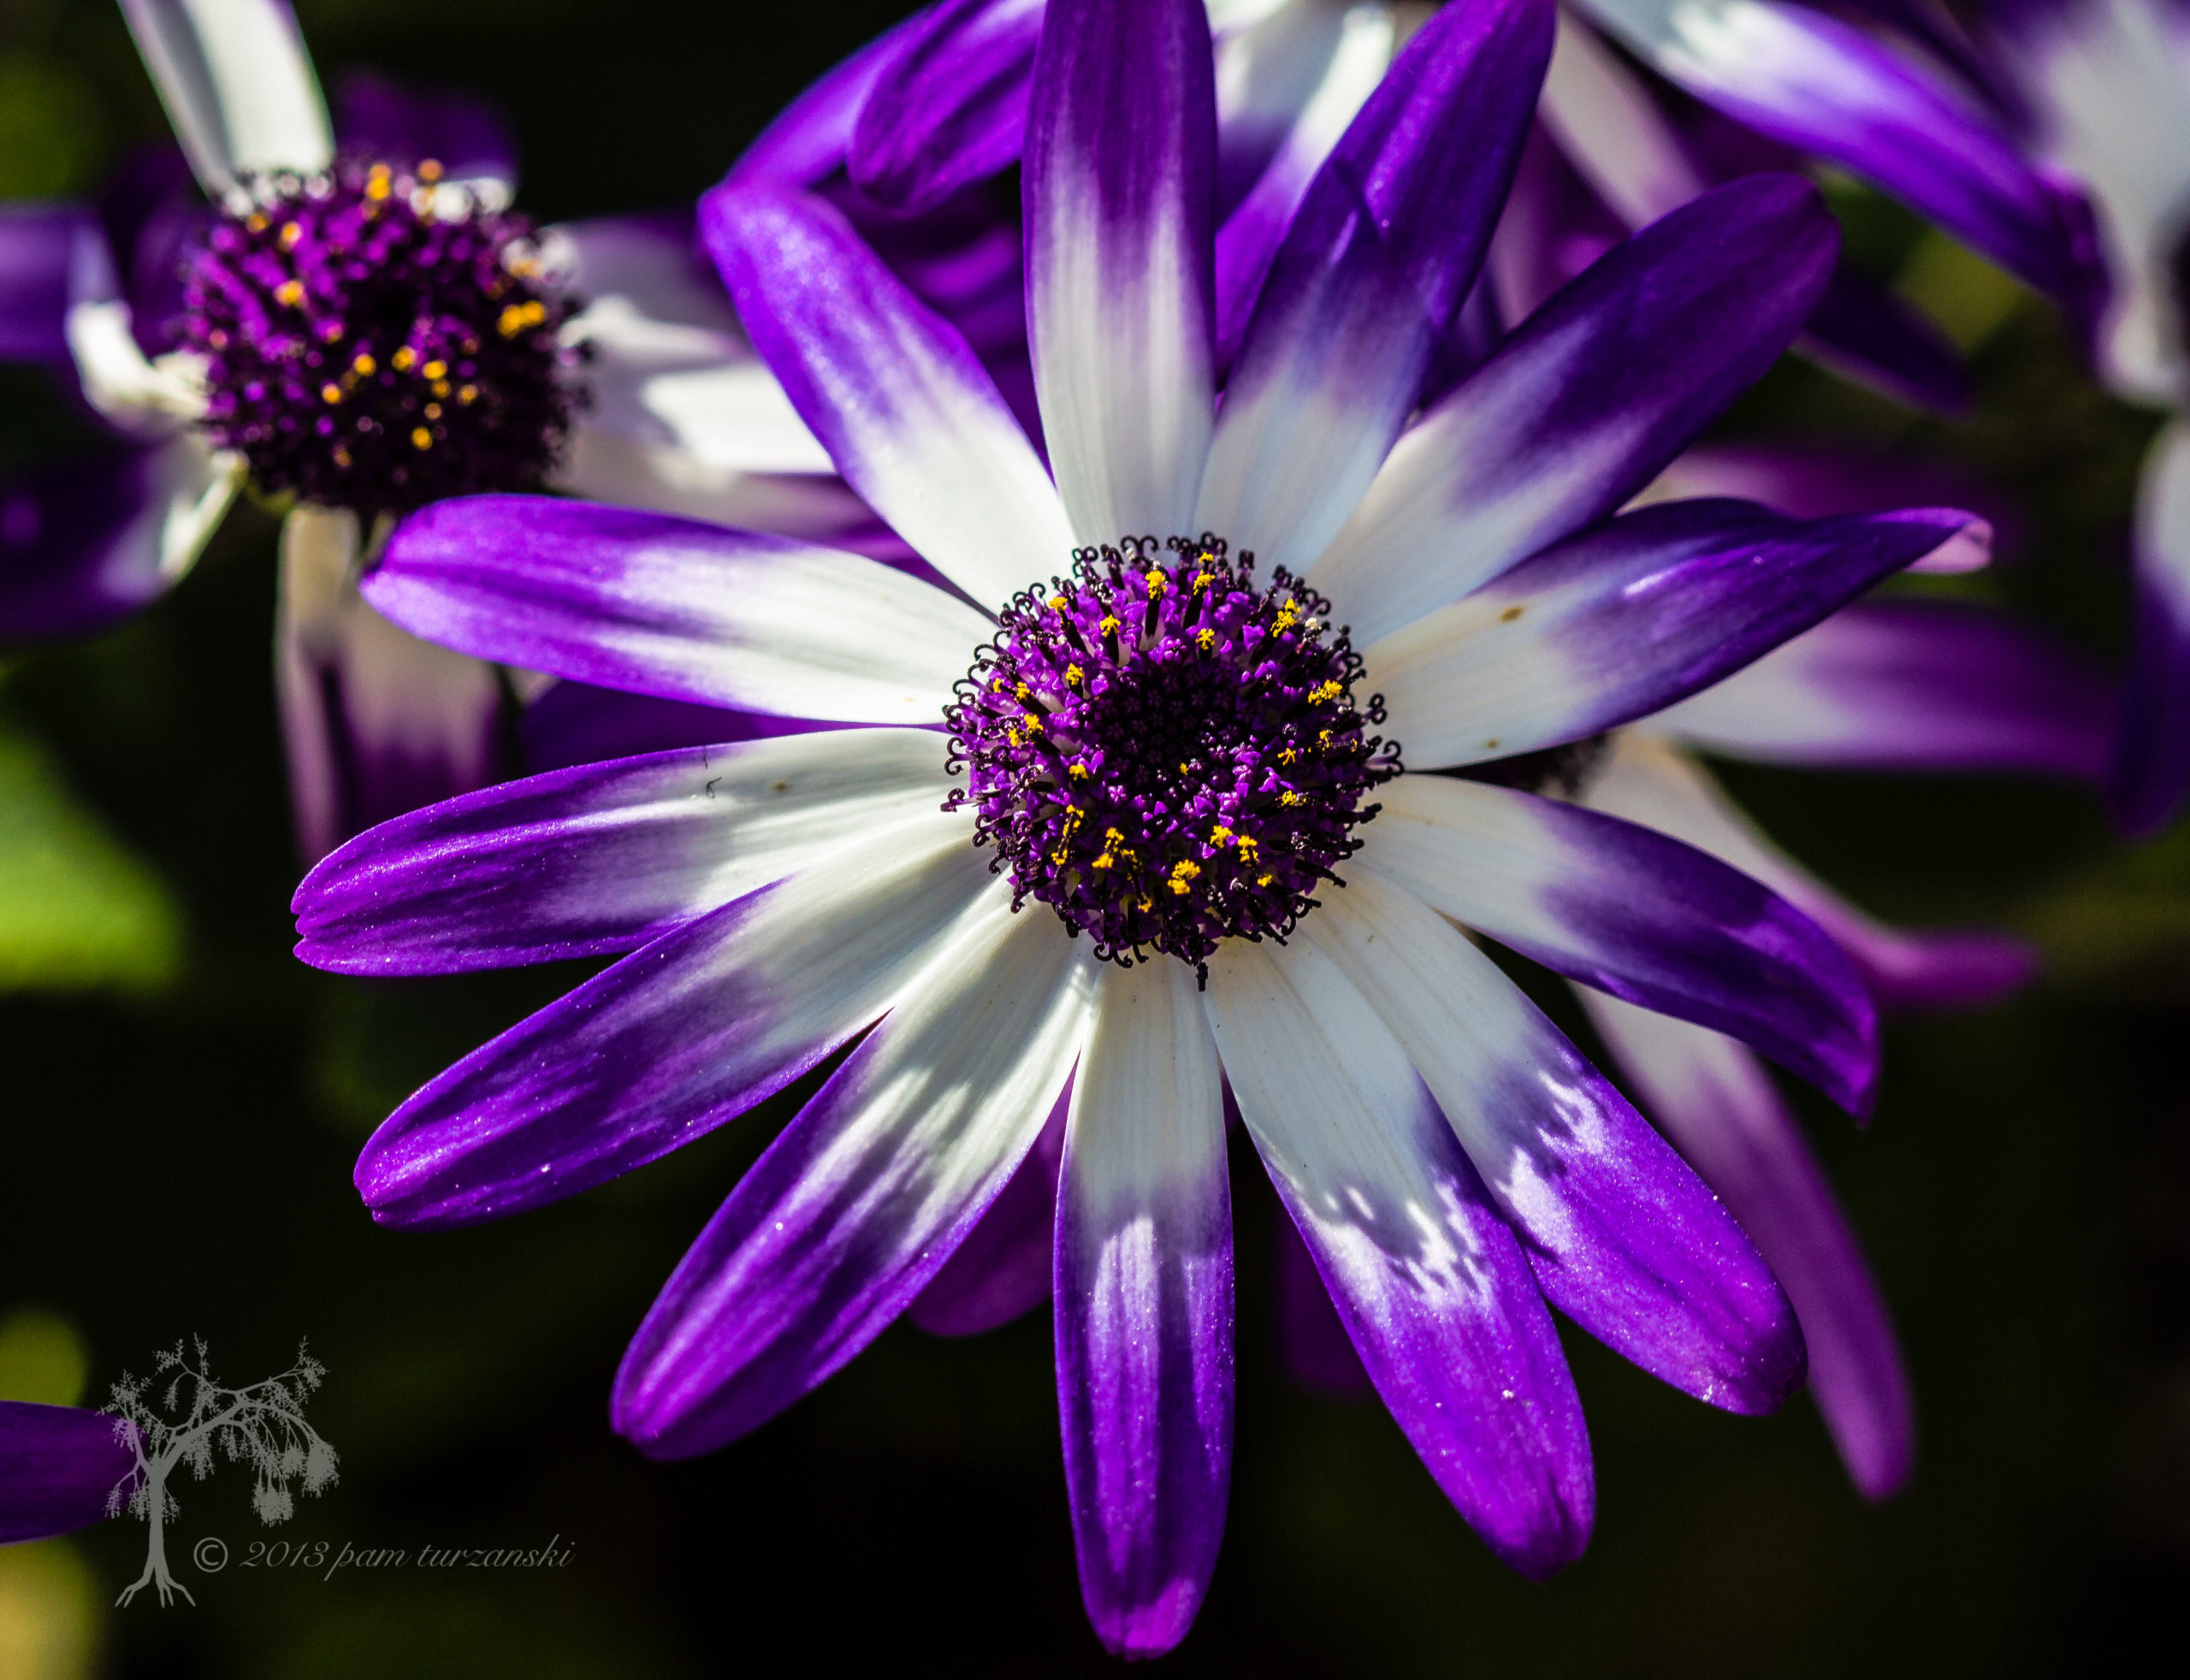 IMG_4925-scaled Editing Flower Photos e nang le Lightroom Presets